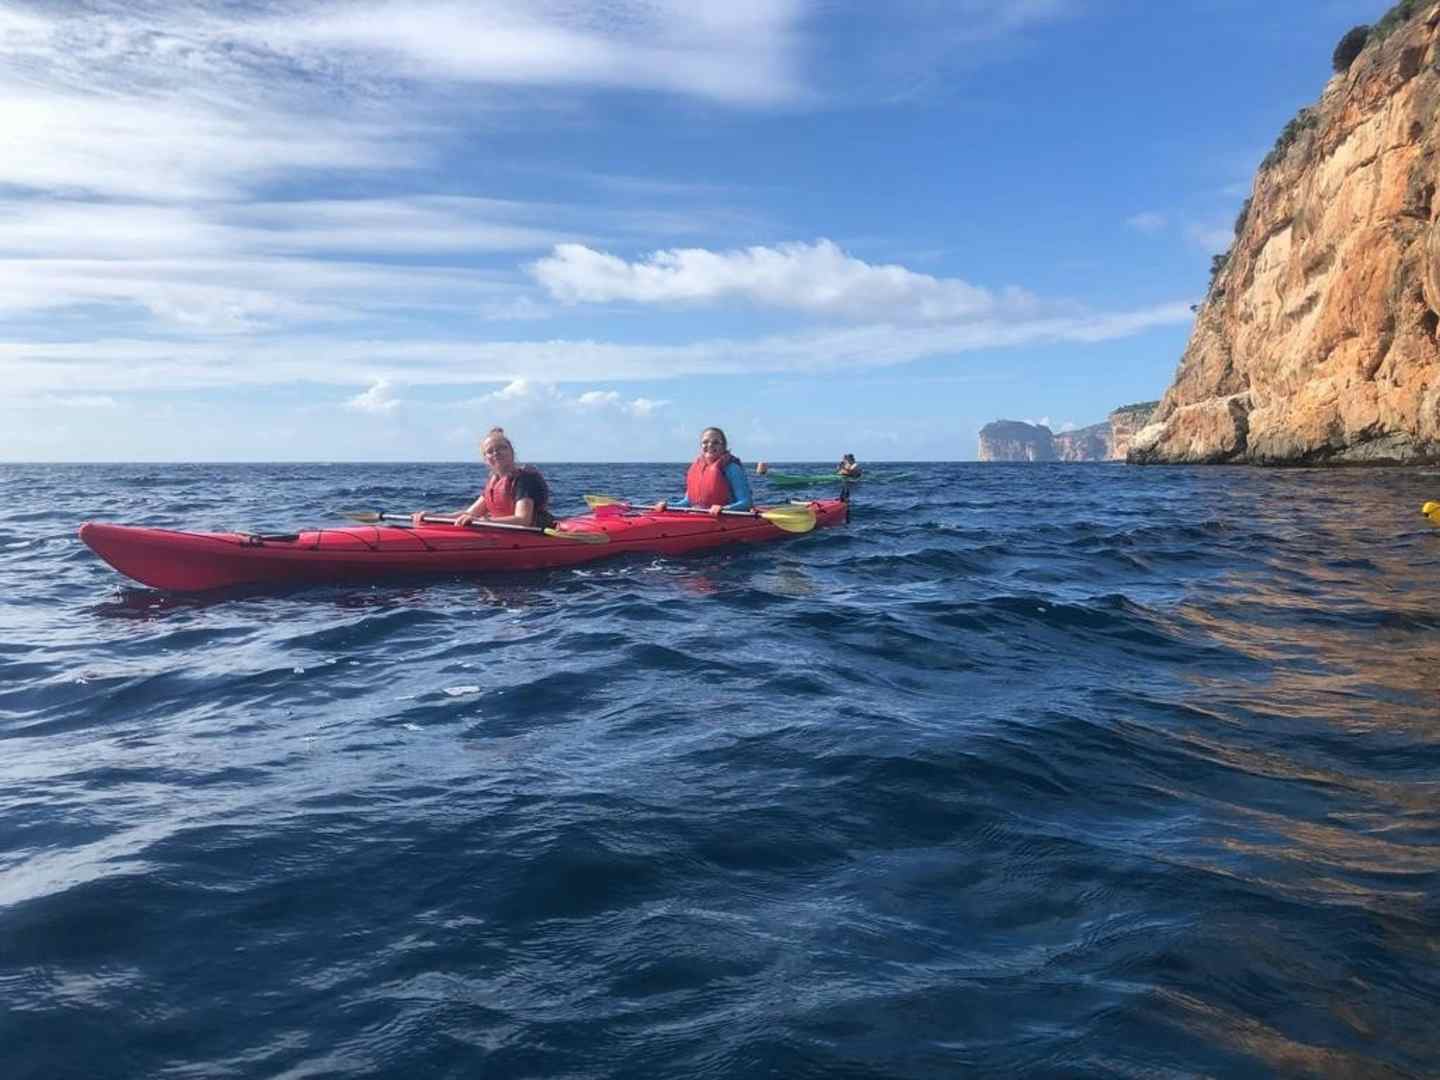 I had a brilliant time kayaking in Sardinia...